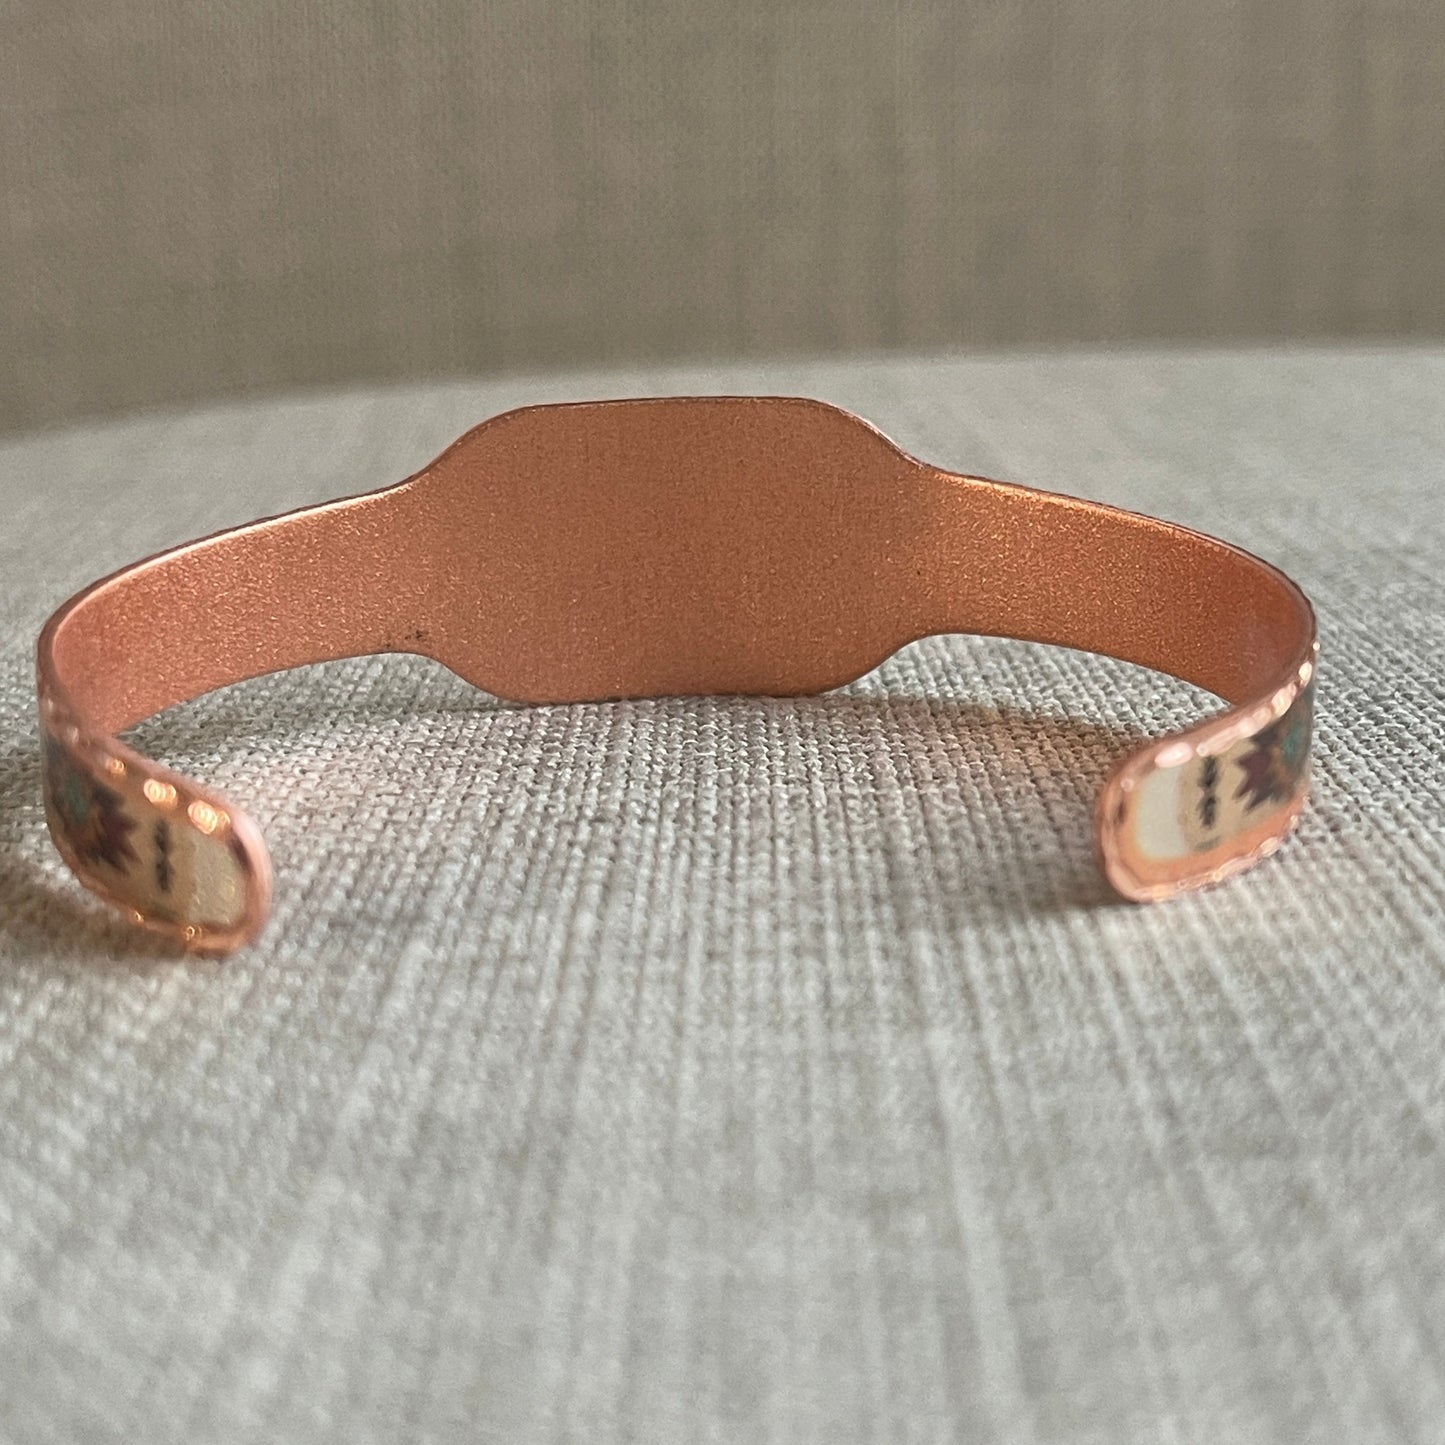 Chakana Painted Copper Bracelet Large